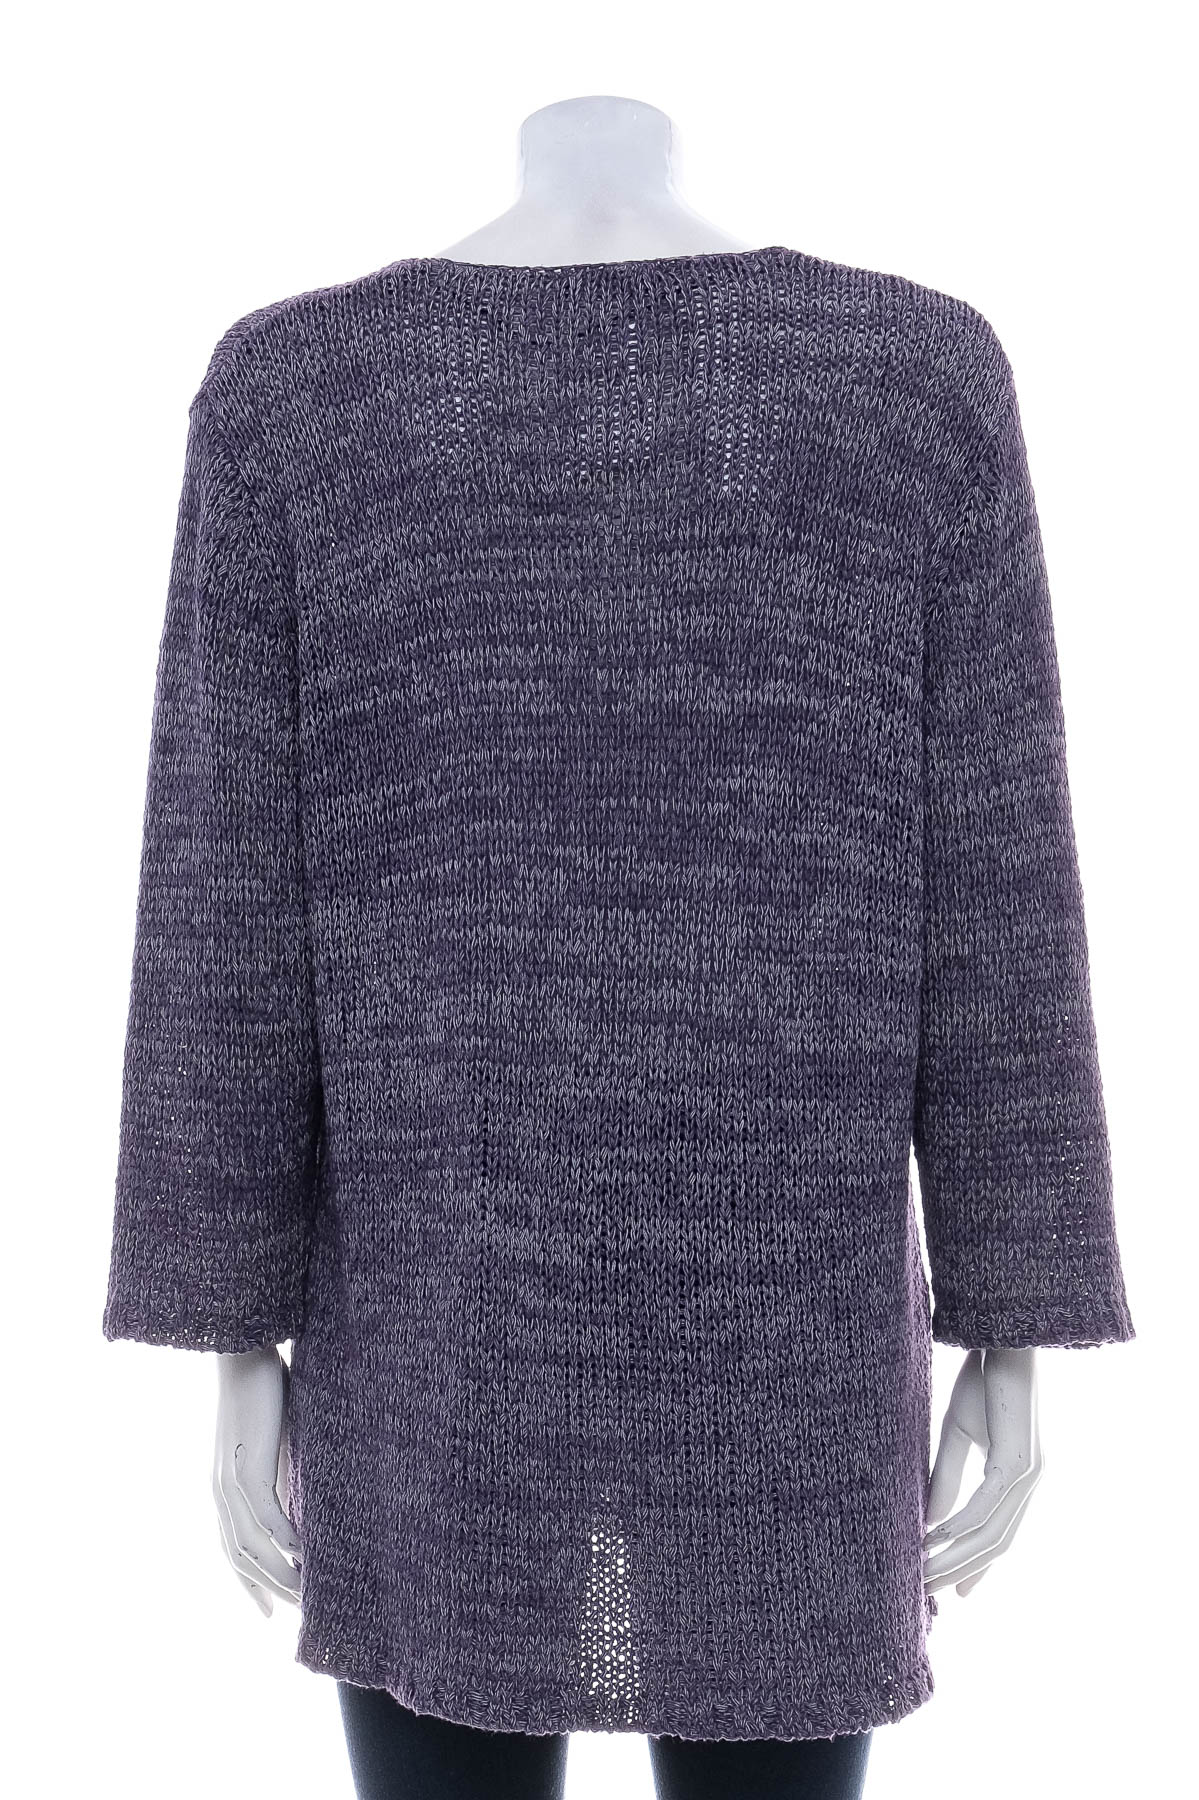 Women's sweater - VIA APPIA - 1